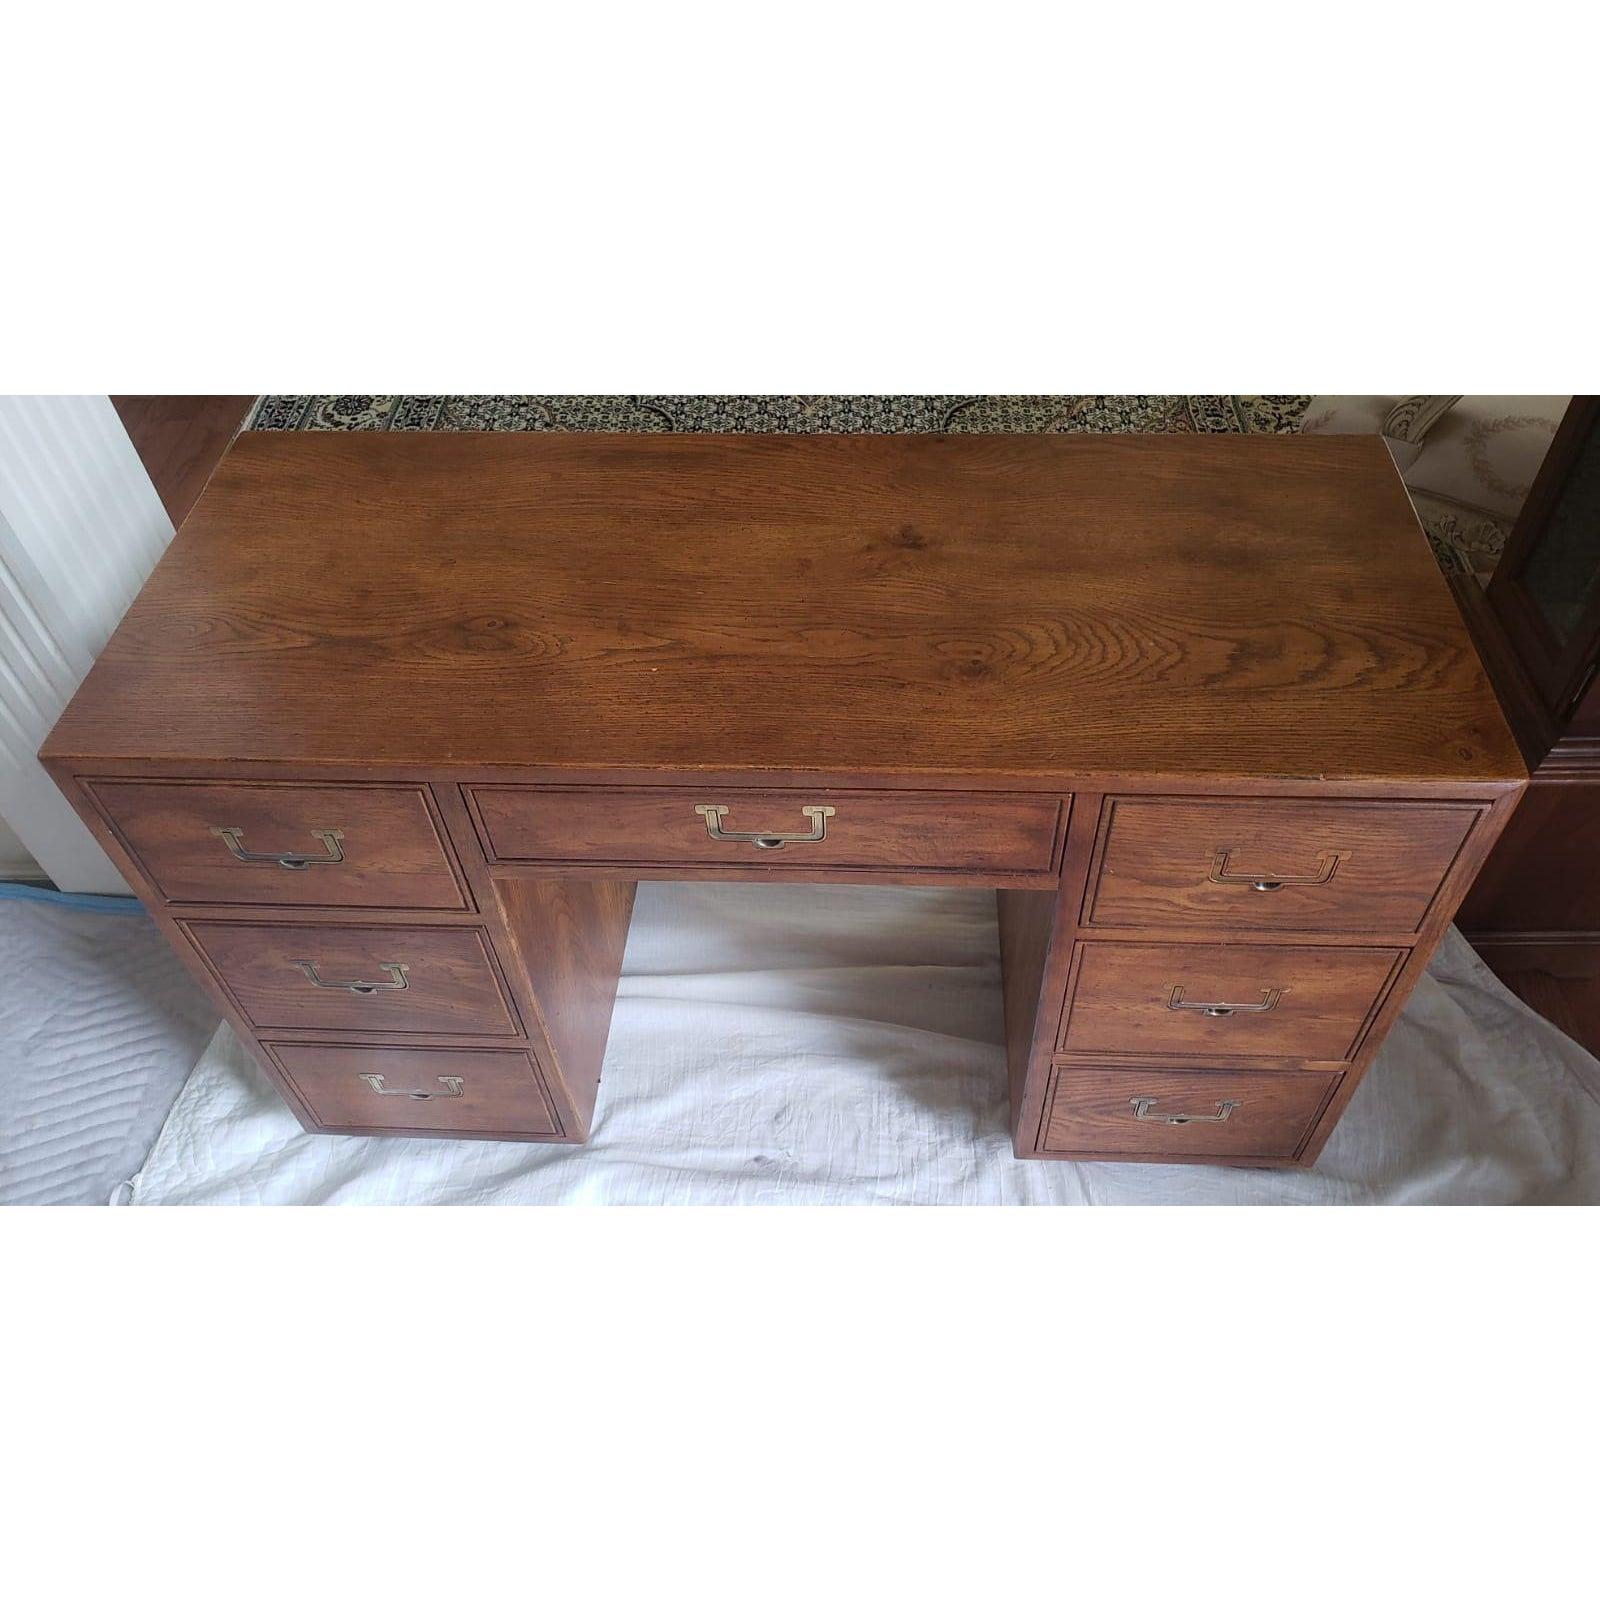 Henredon artefacts partners desk in solid Red Oak. Campaign style desk. Excellent vintage condition.
Table Measures 48